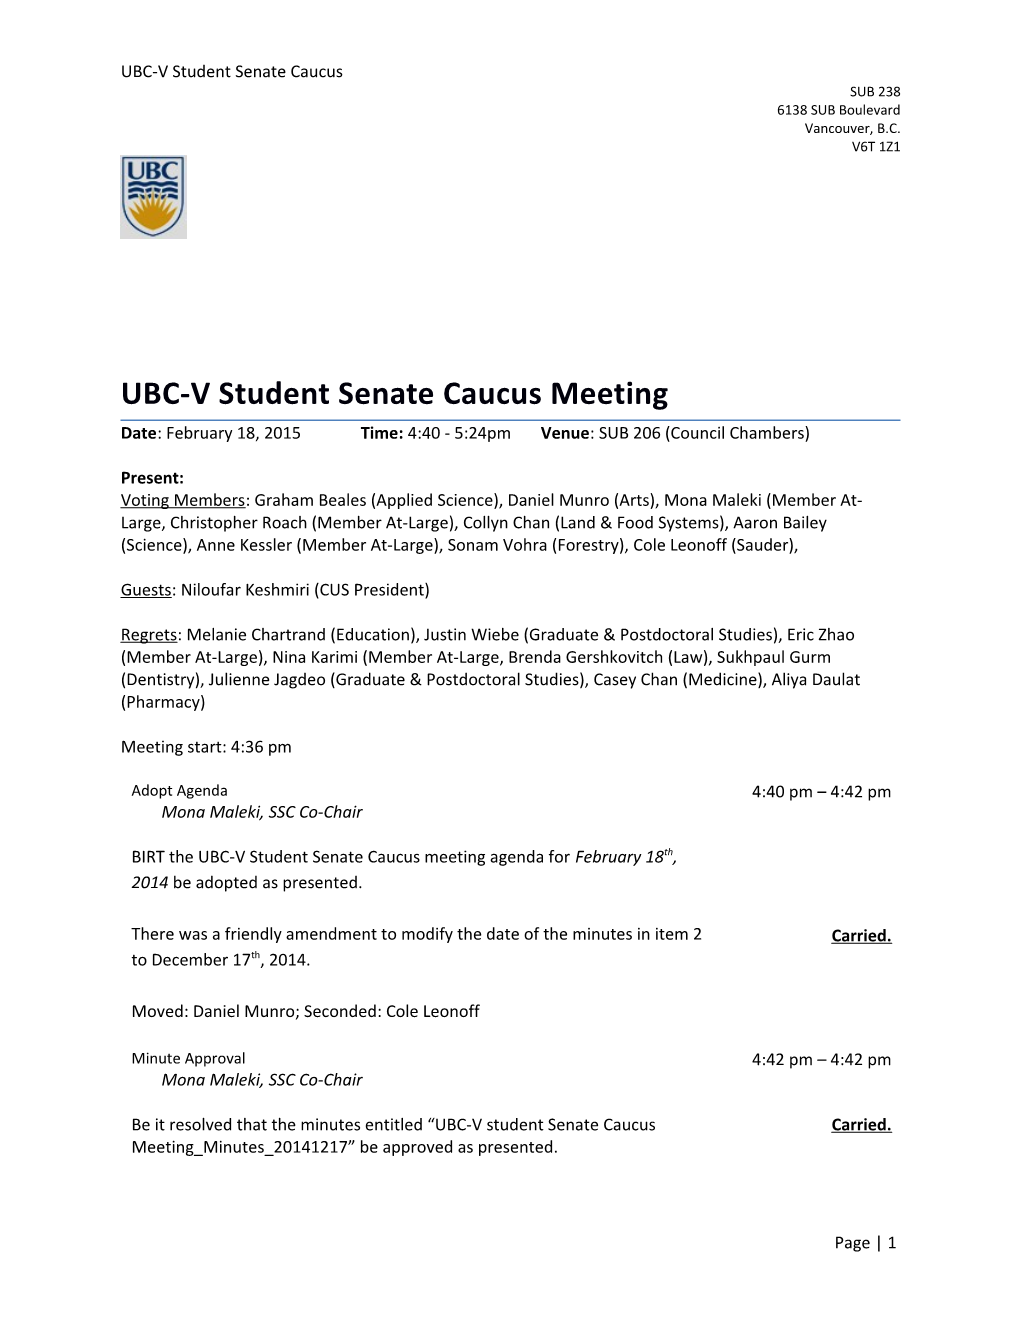 UBC-V Student Senatecaucus Meeting